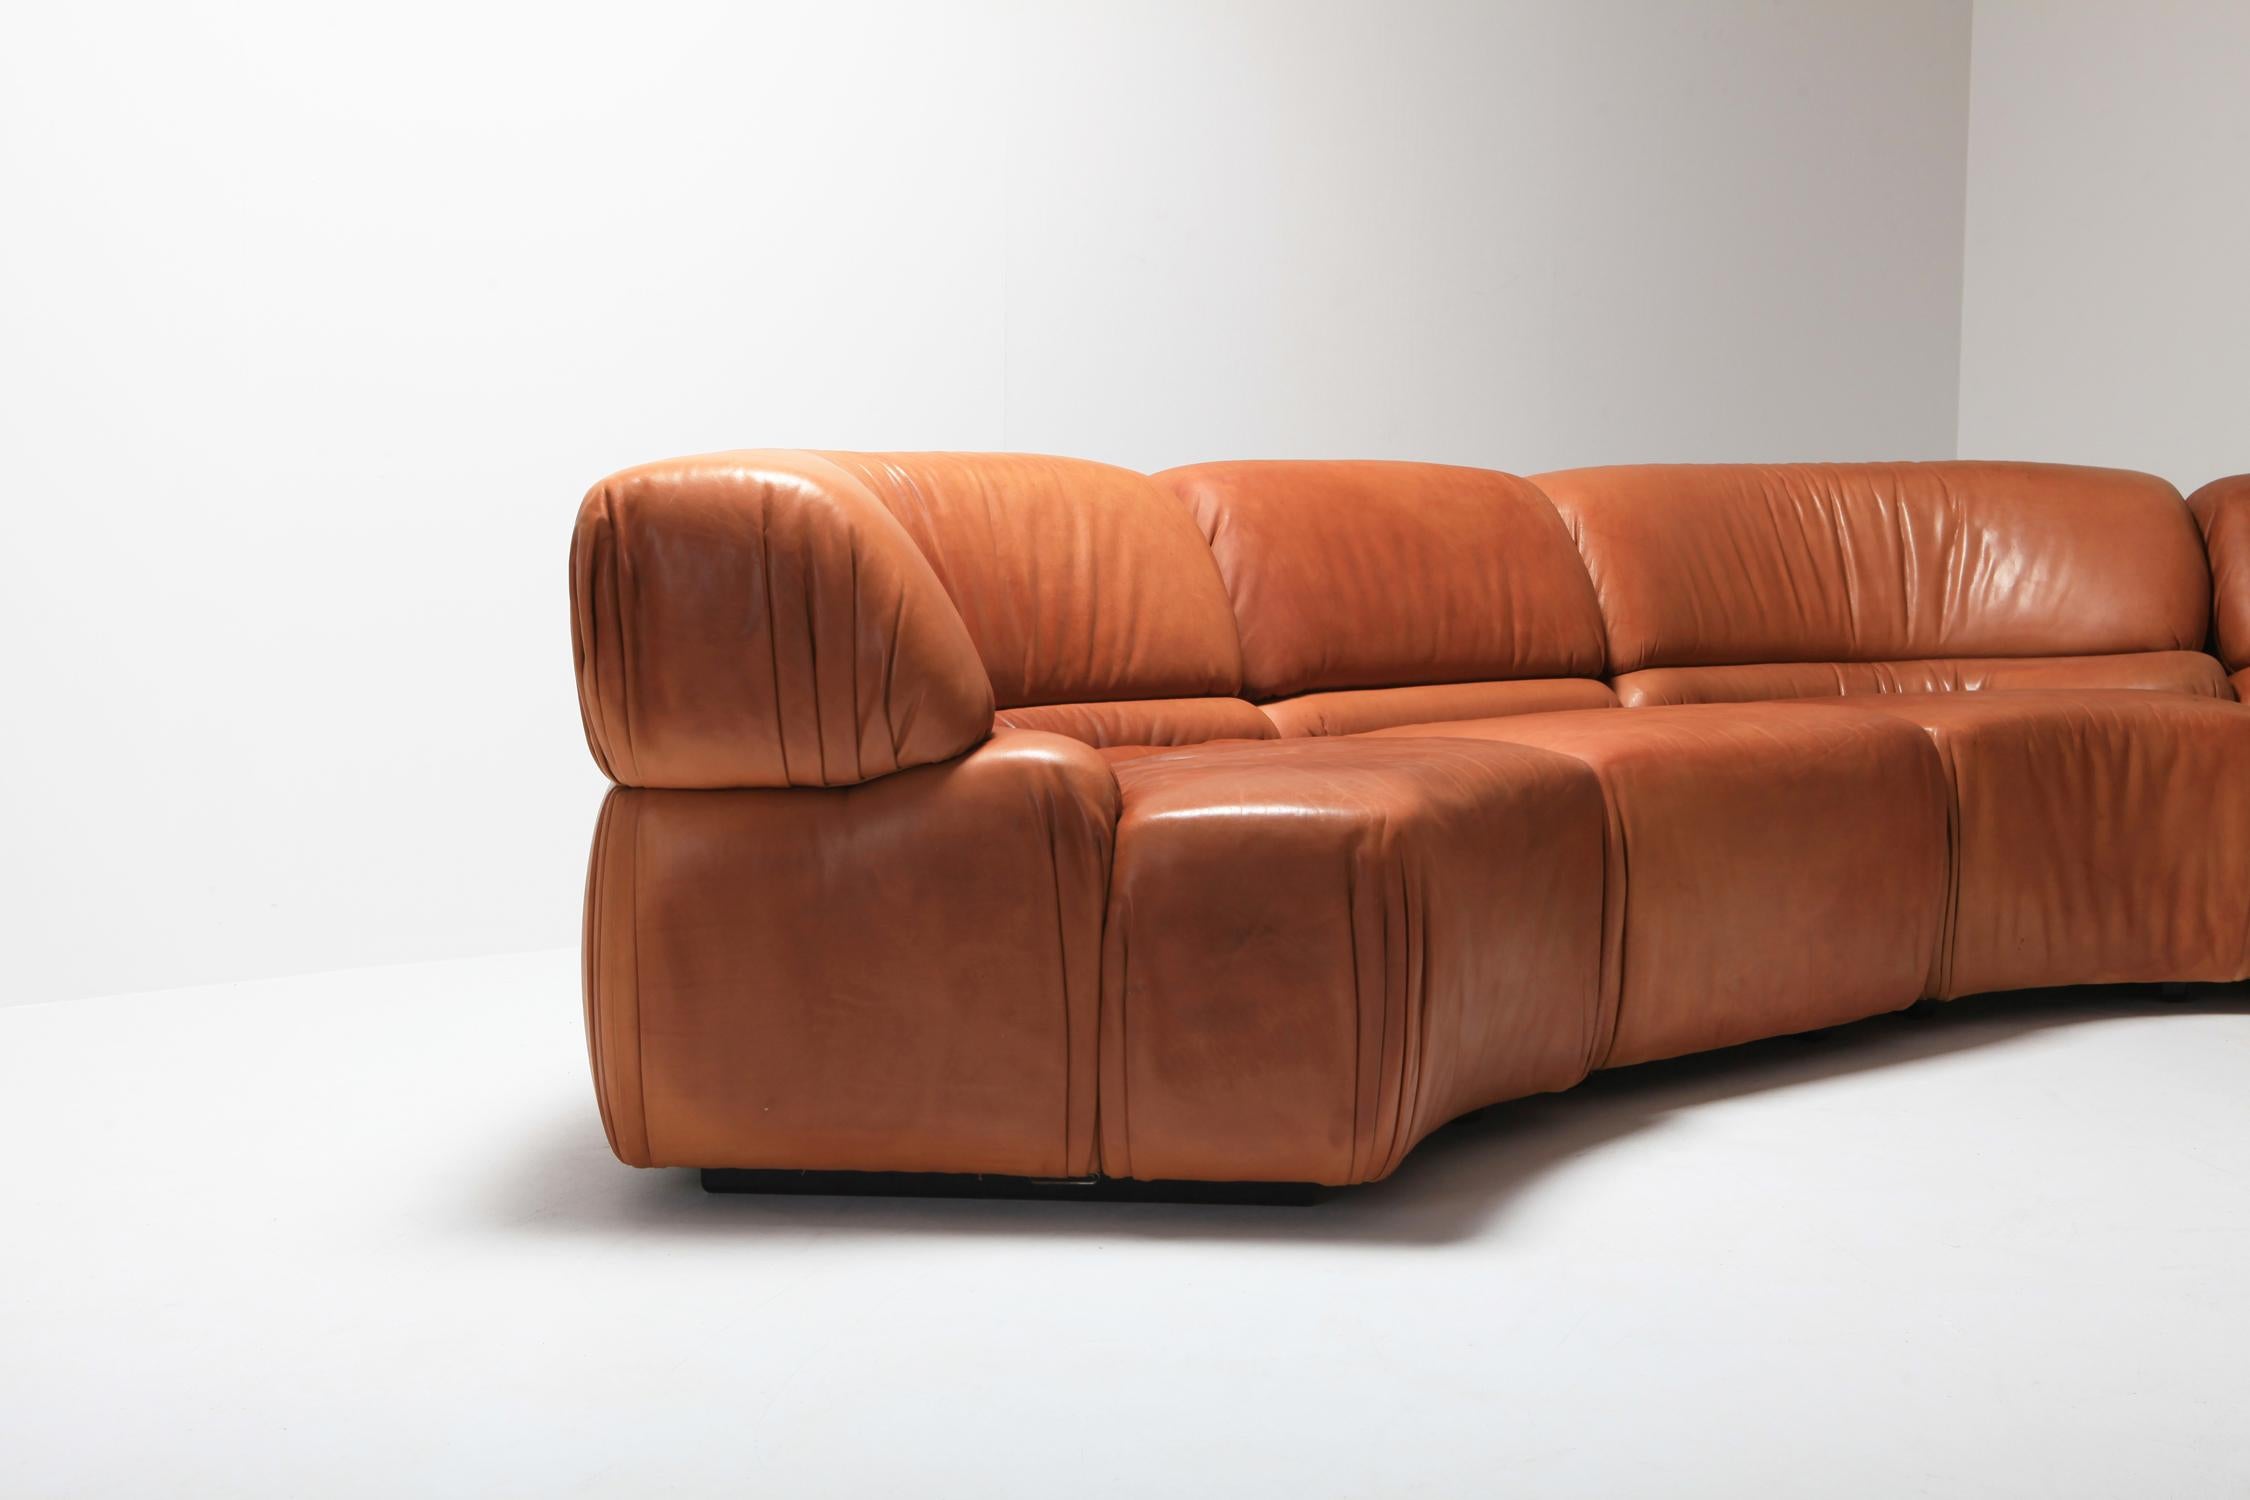 Sectional Cognac Leather Sofa 'Cosmos' by De Sede, Switzerland 2